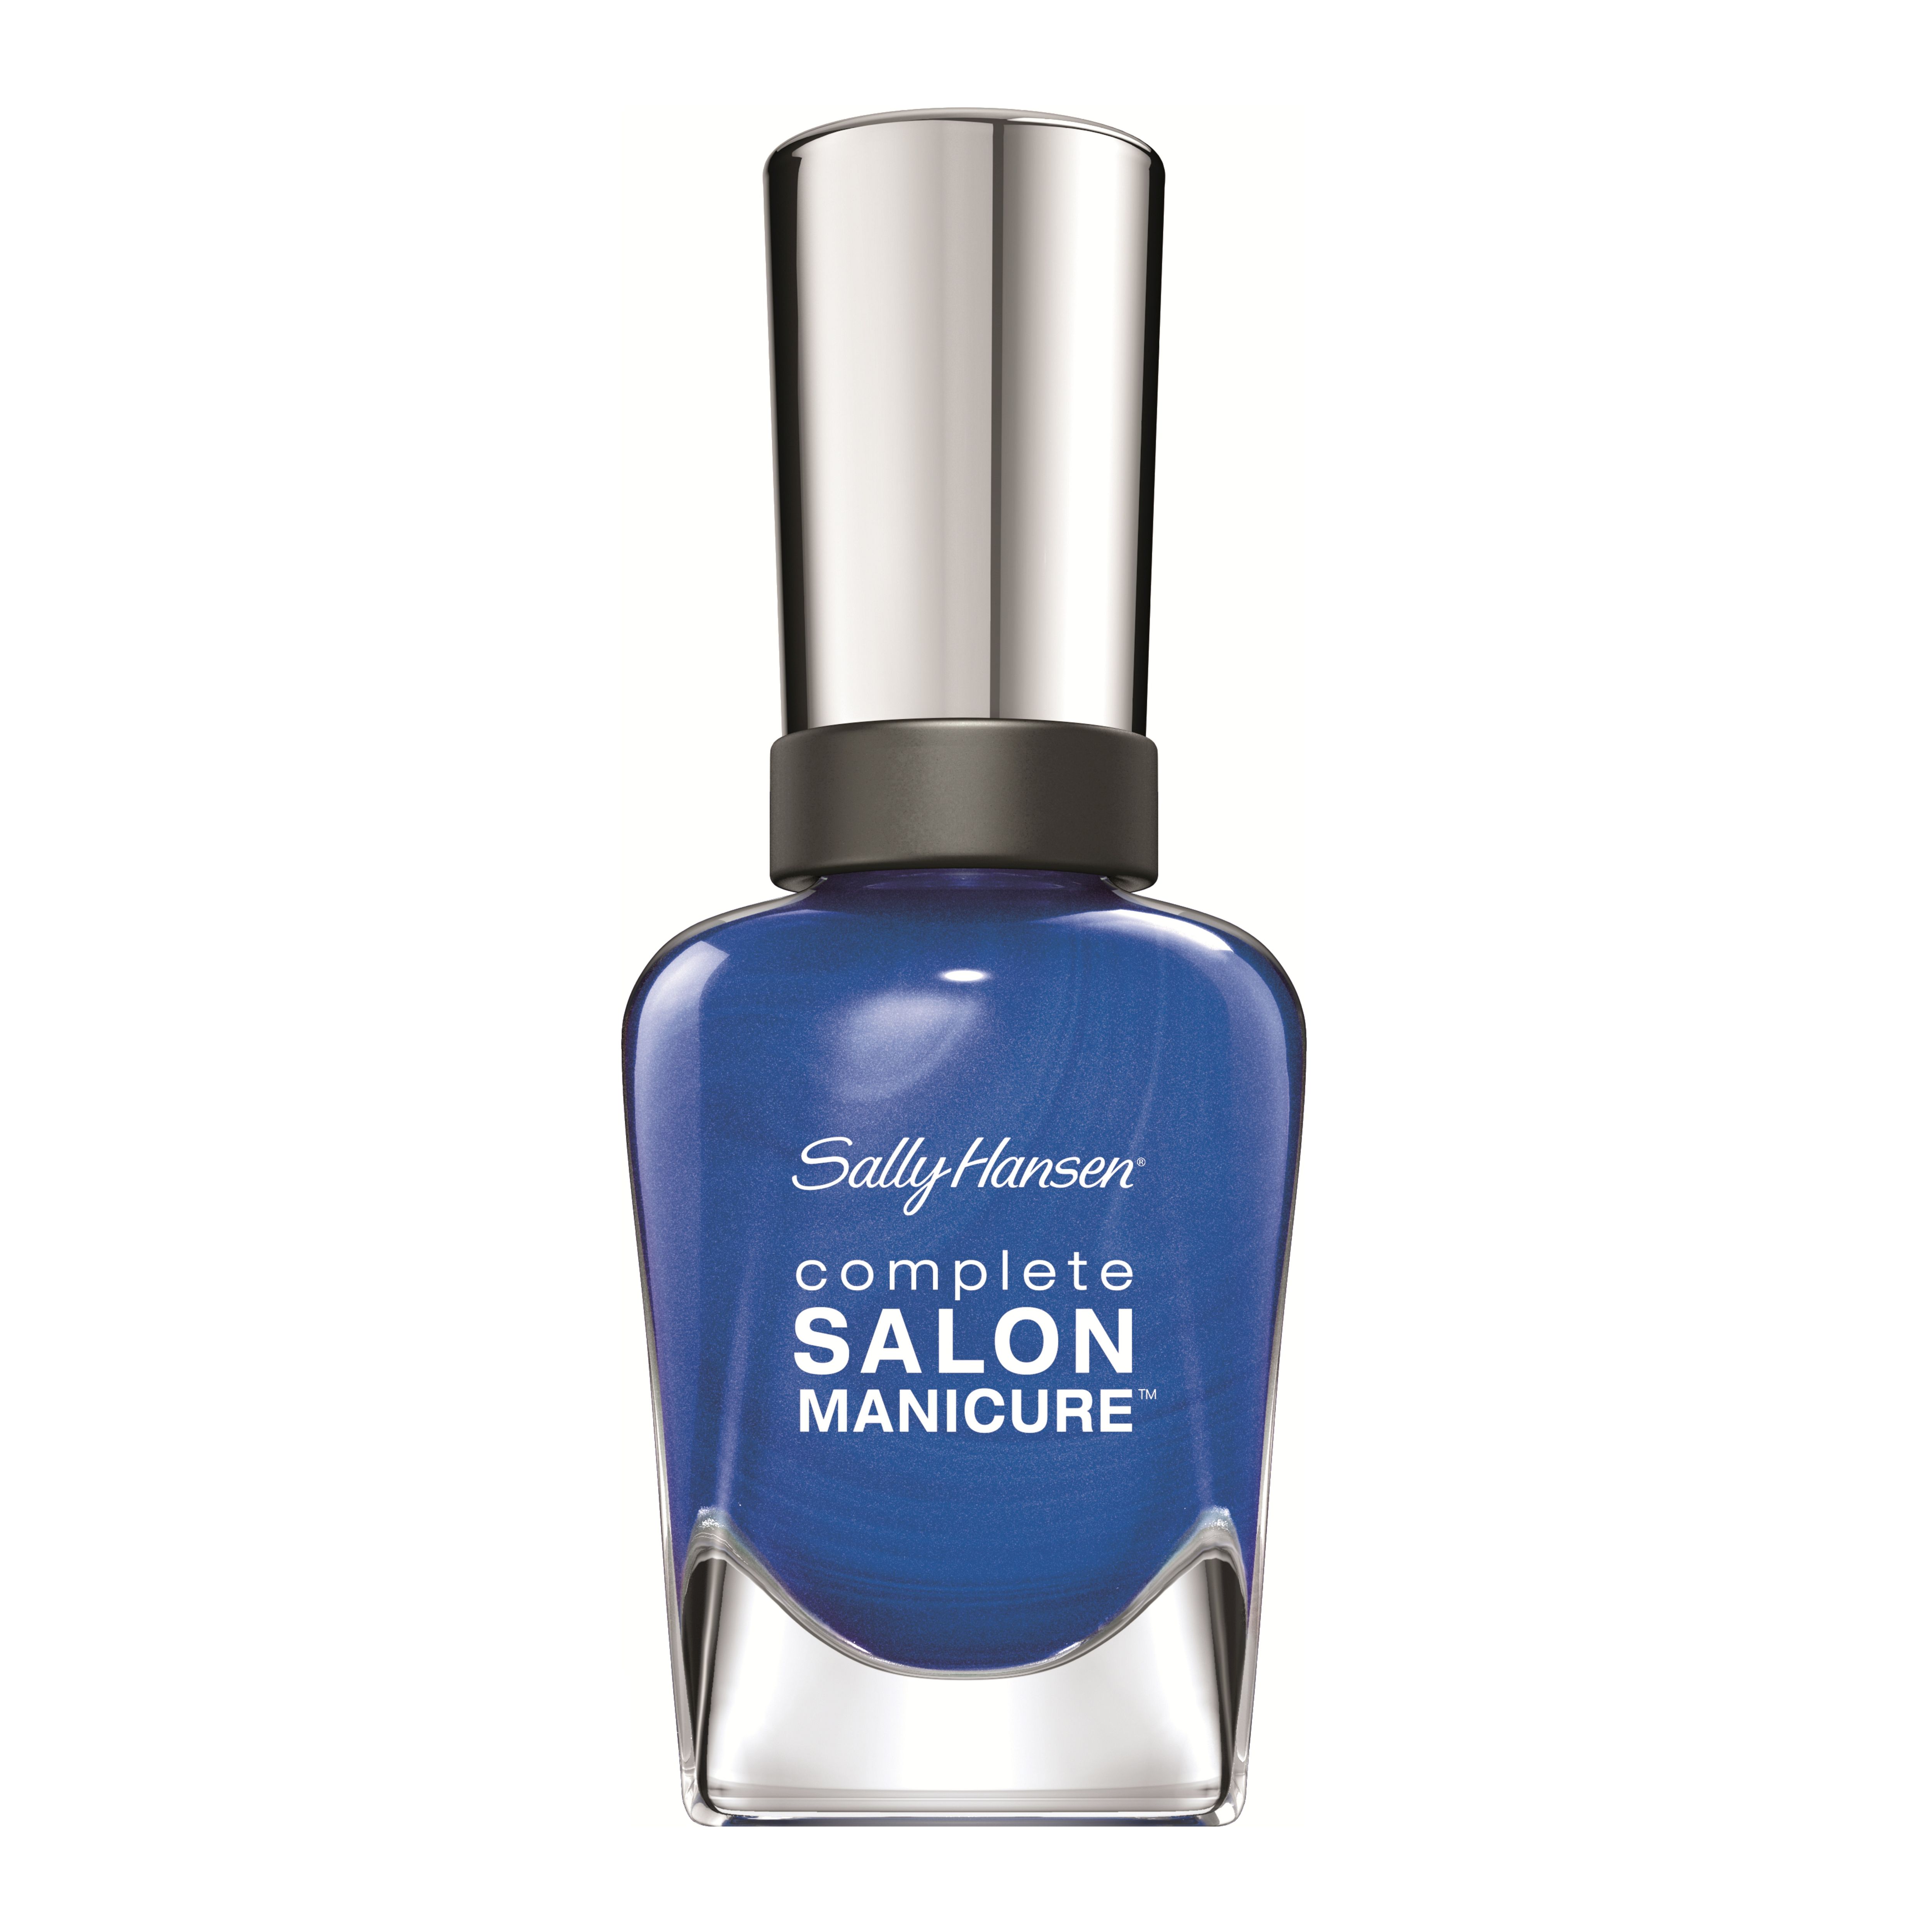 Sally Hansen Complete Salon Manicure Nail Polish